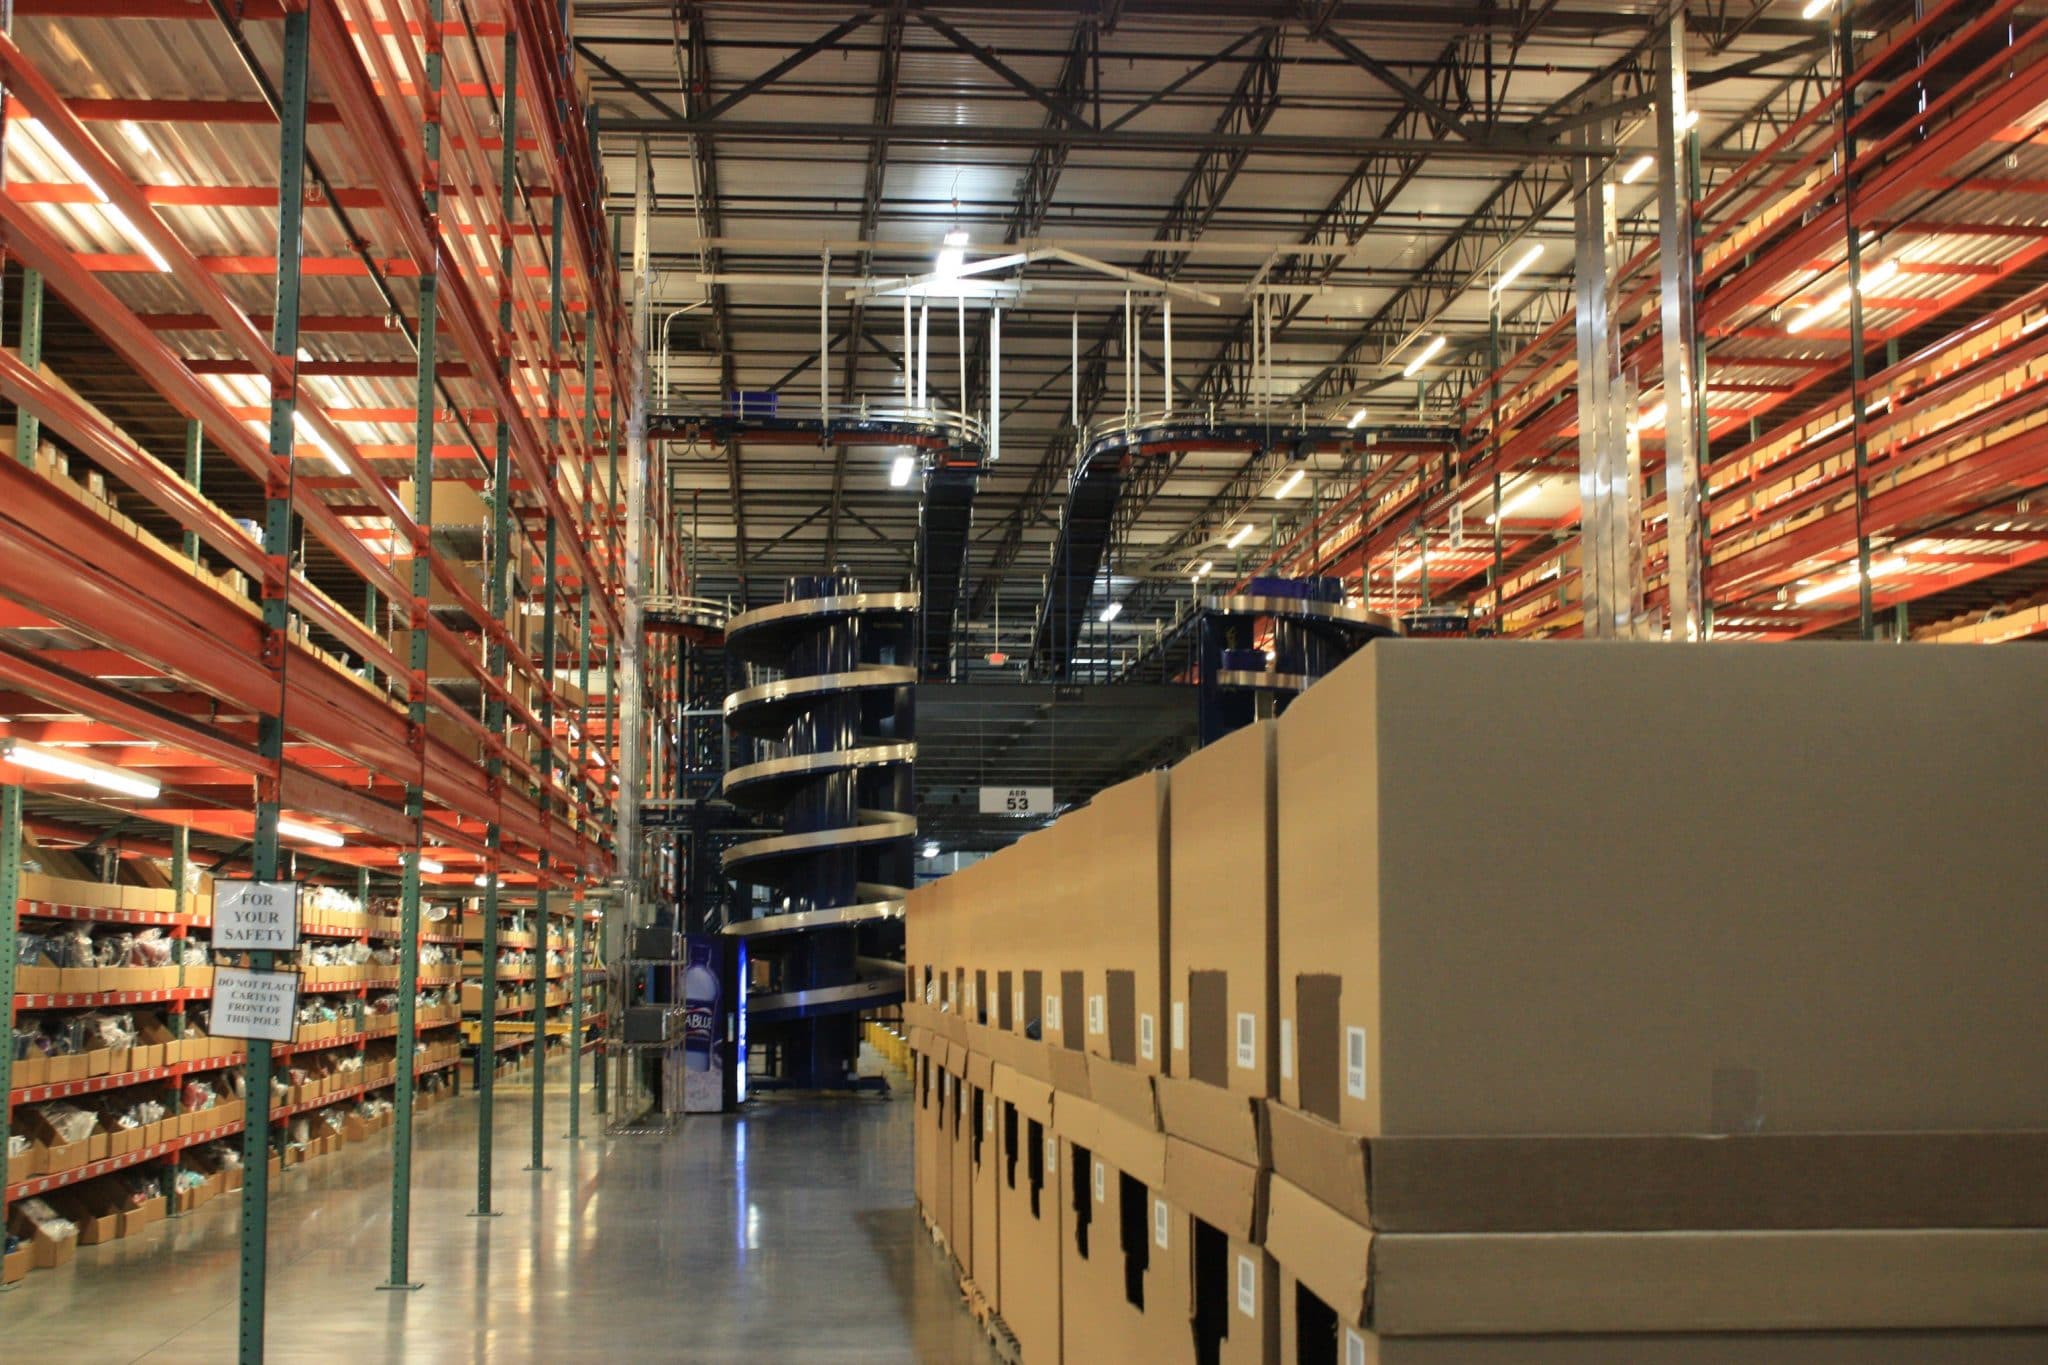 Radial to open $40 million distribution center in Locust Grove